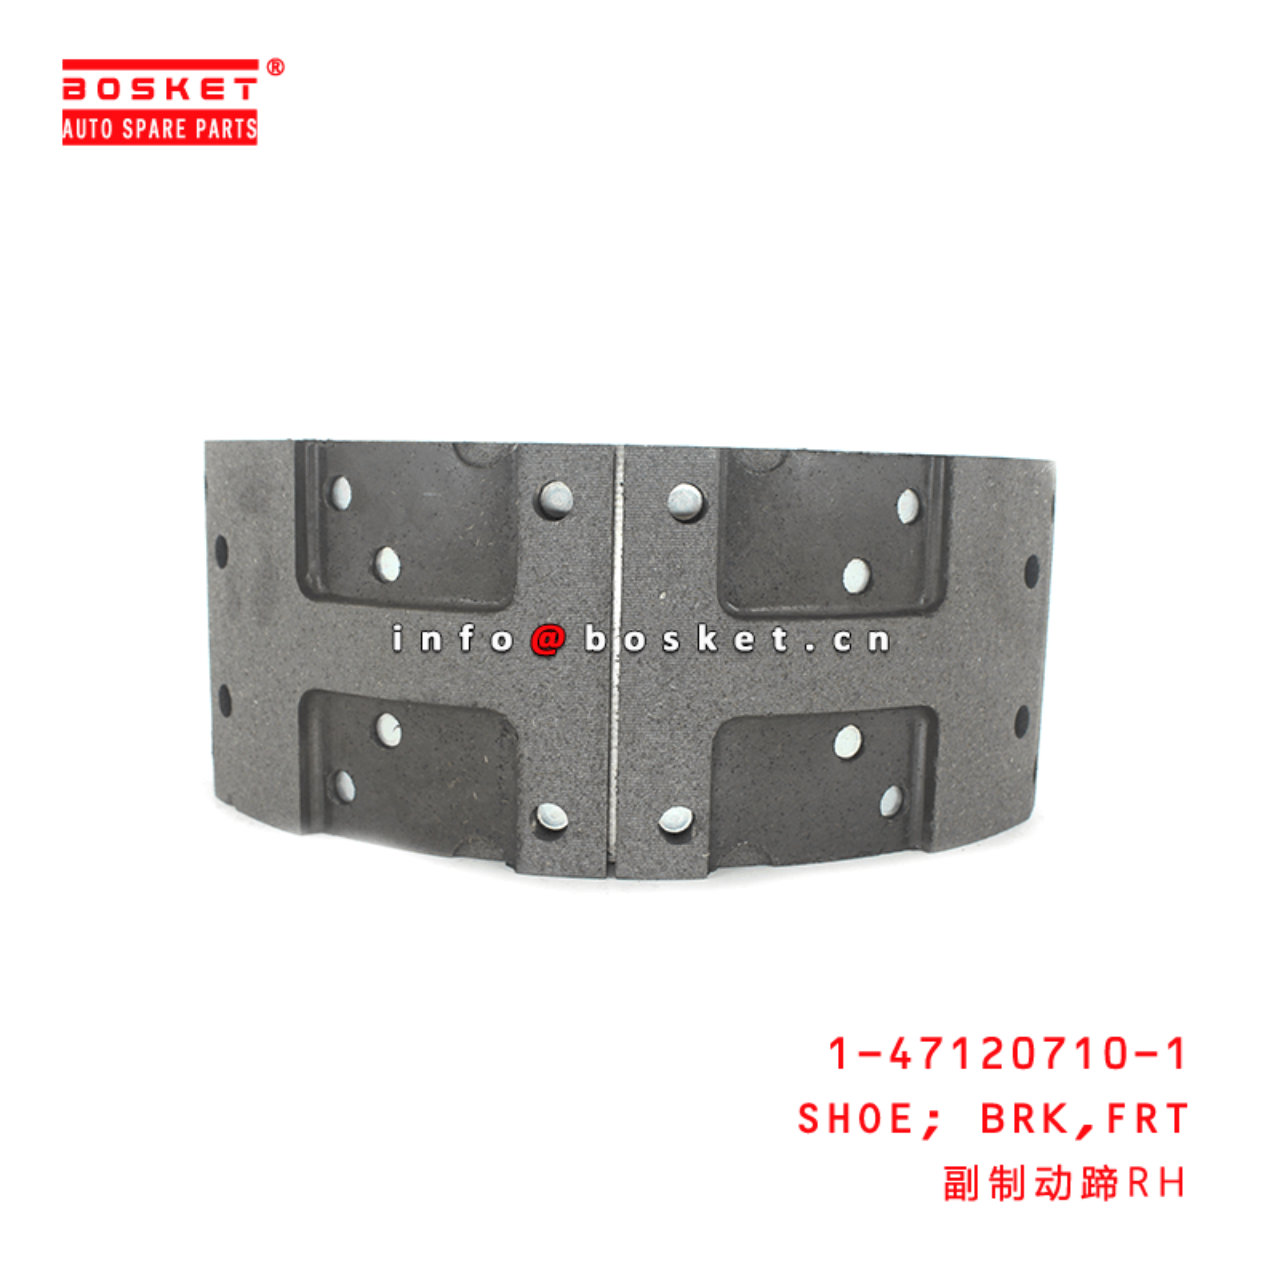 1-47120710-1 Front Brake Shoe 1471207101 Suitable for ISUZU FTR